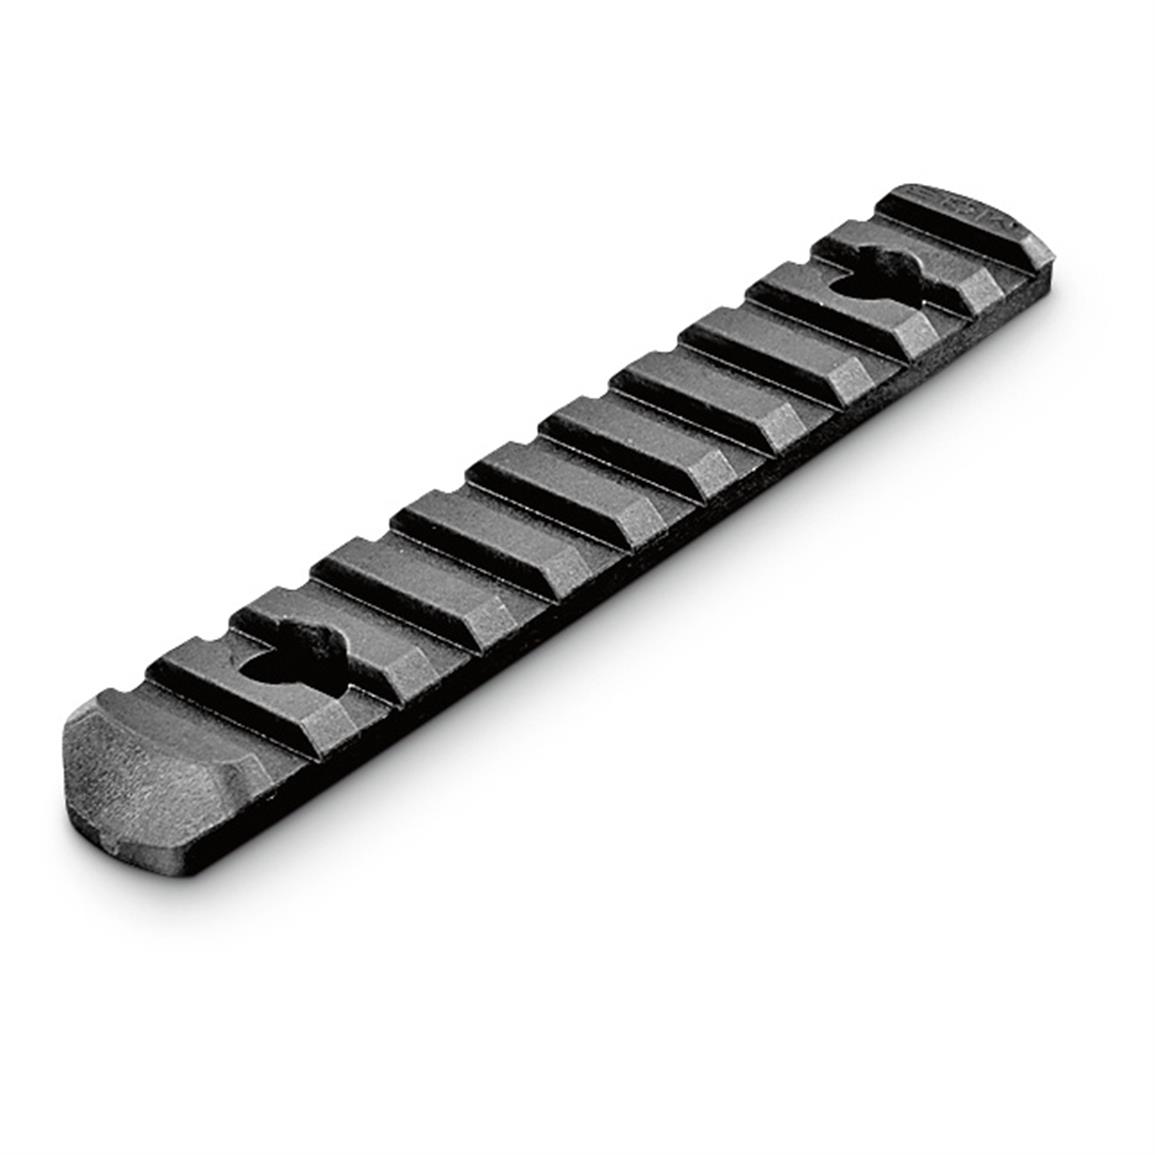 MOE 11-slot Polymer Rail